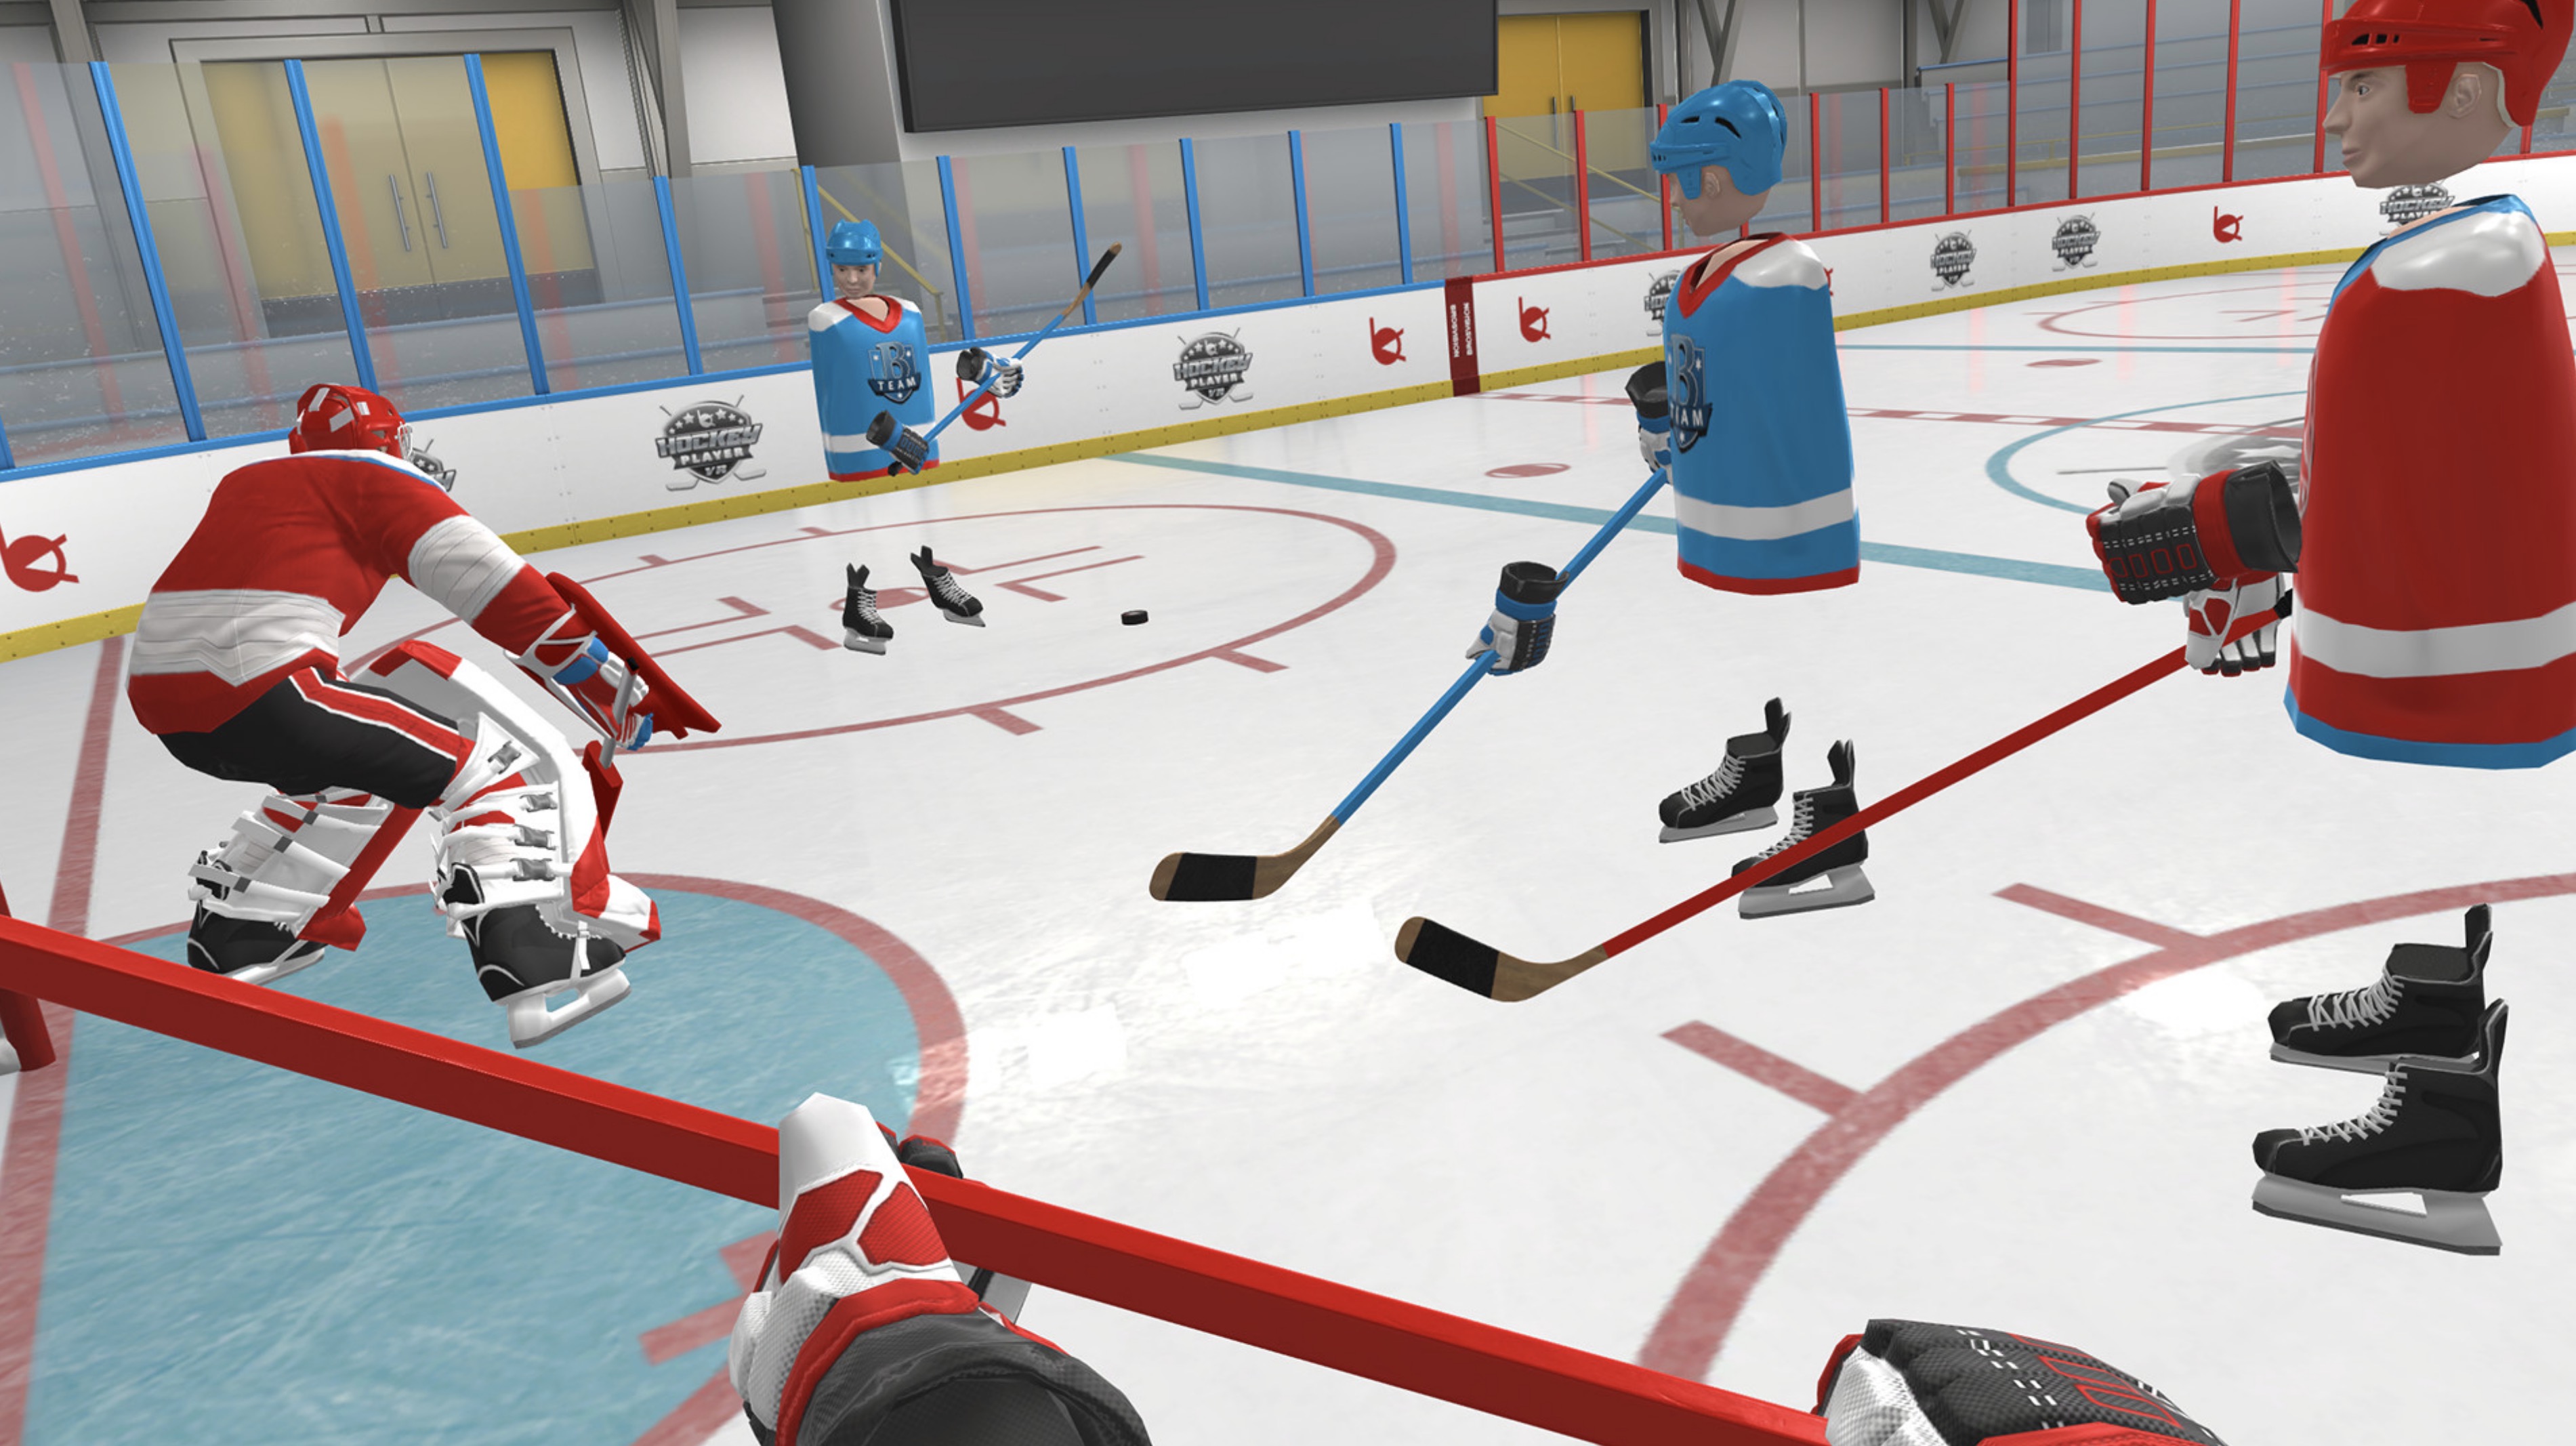 Большие игры хоккей. Ice Hockey игра. Hockey VR Oculus. Качканар игра хоккей. Хоккеисты в игре.